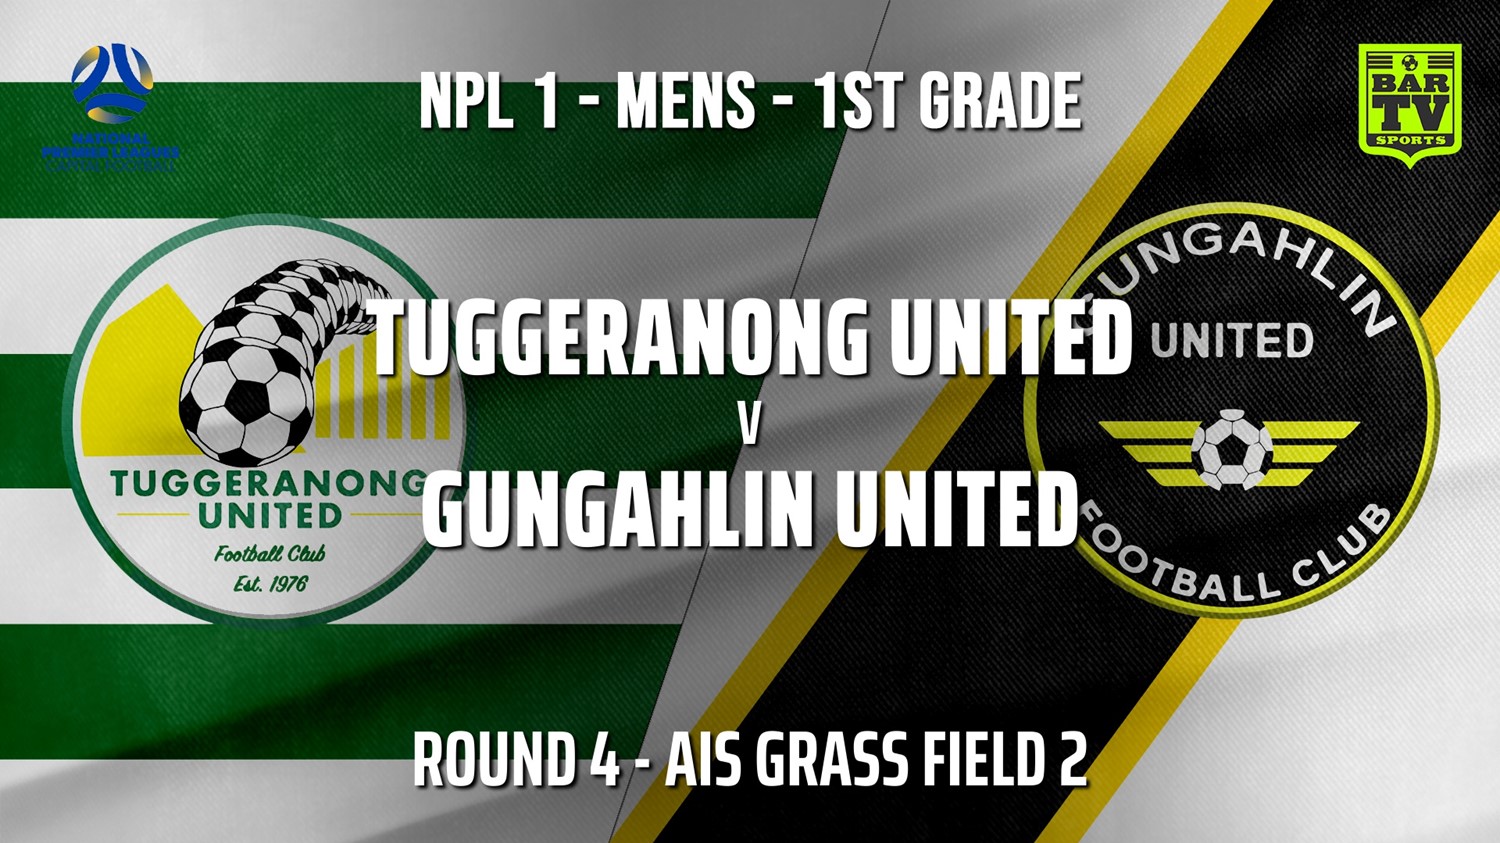 210526-NPL - CAPITAL Round 4 - Tuggeranong United FC v Gungahlin United FC Minigame Slate Image